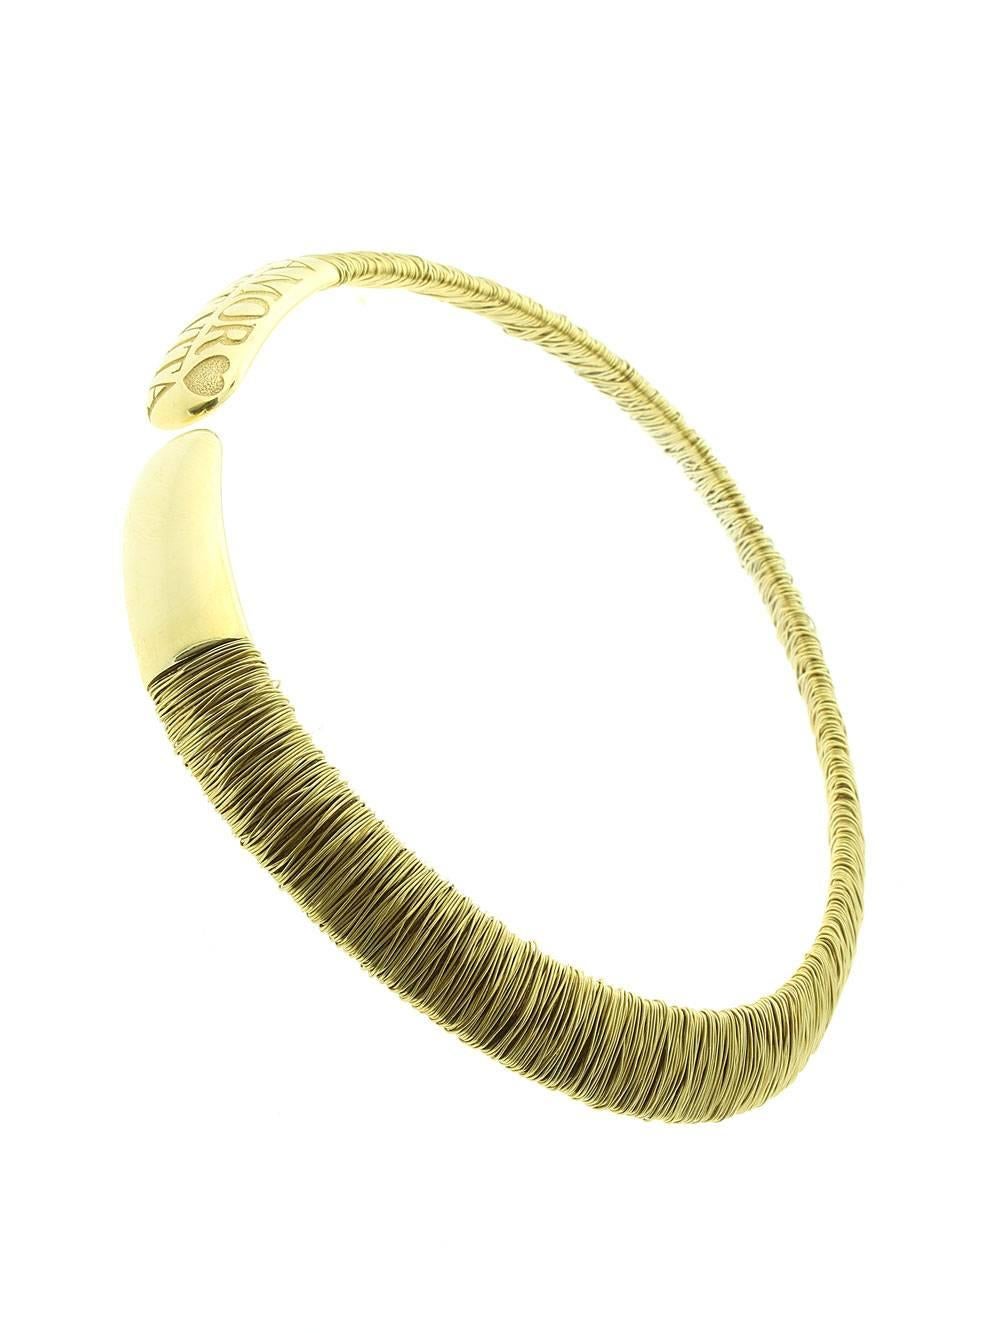 Women's Pasquale Bruni Yellow Gold Choker Necklace